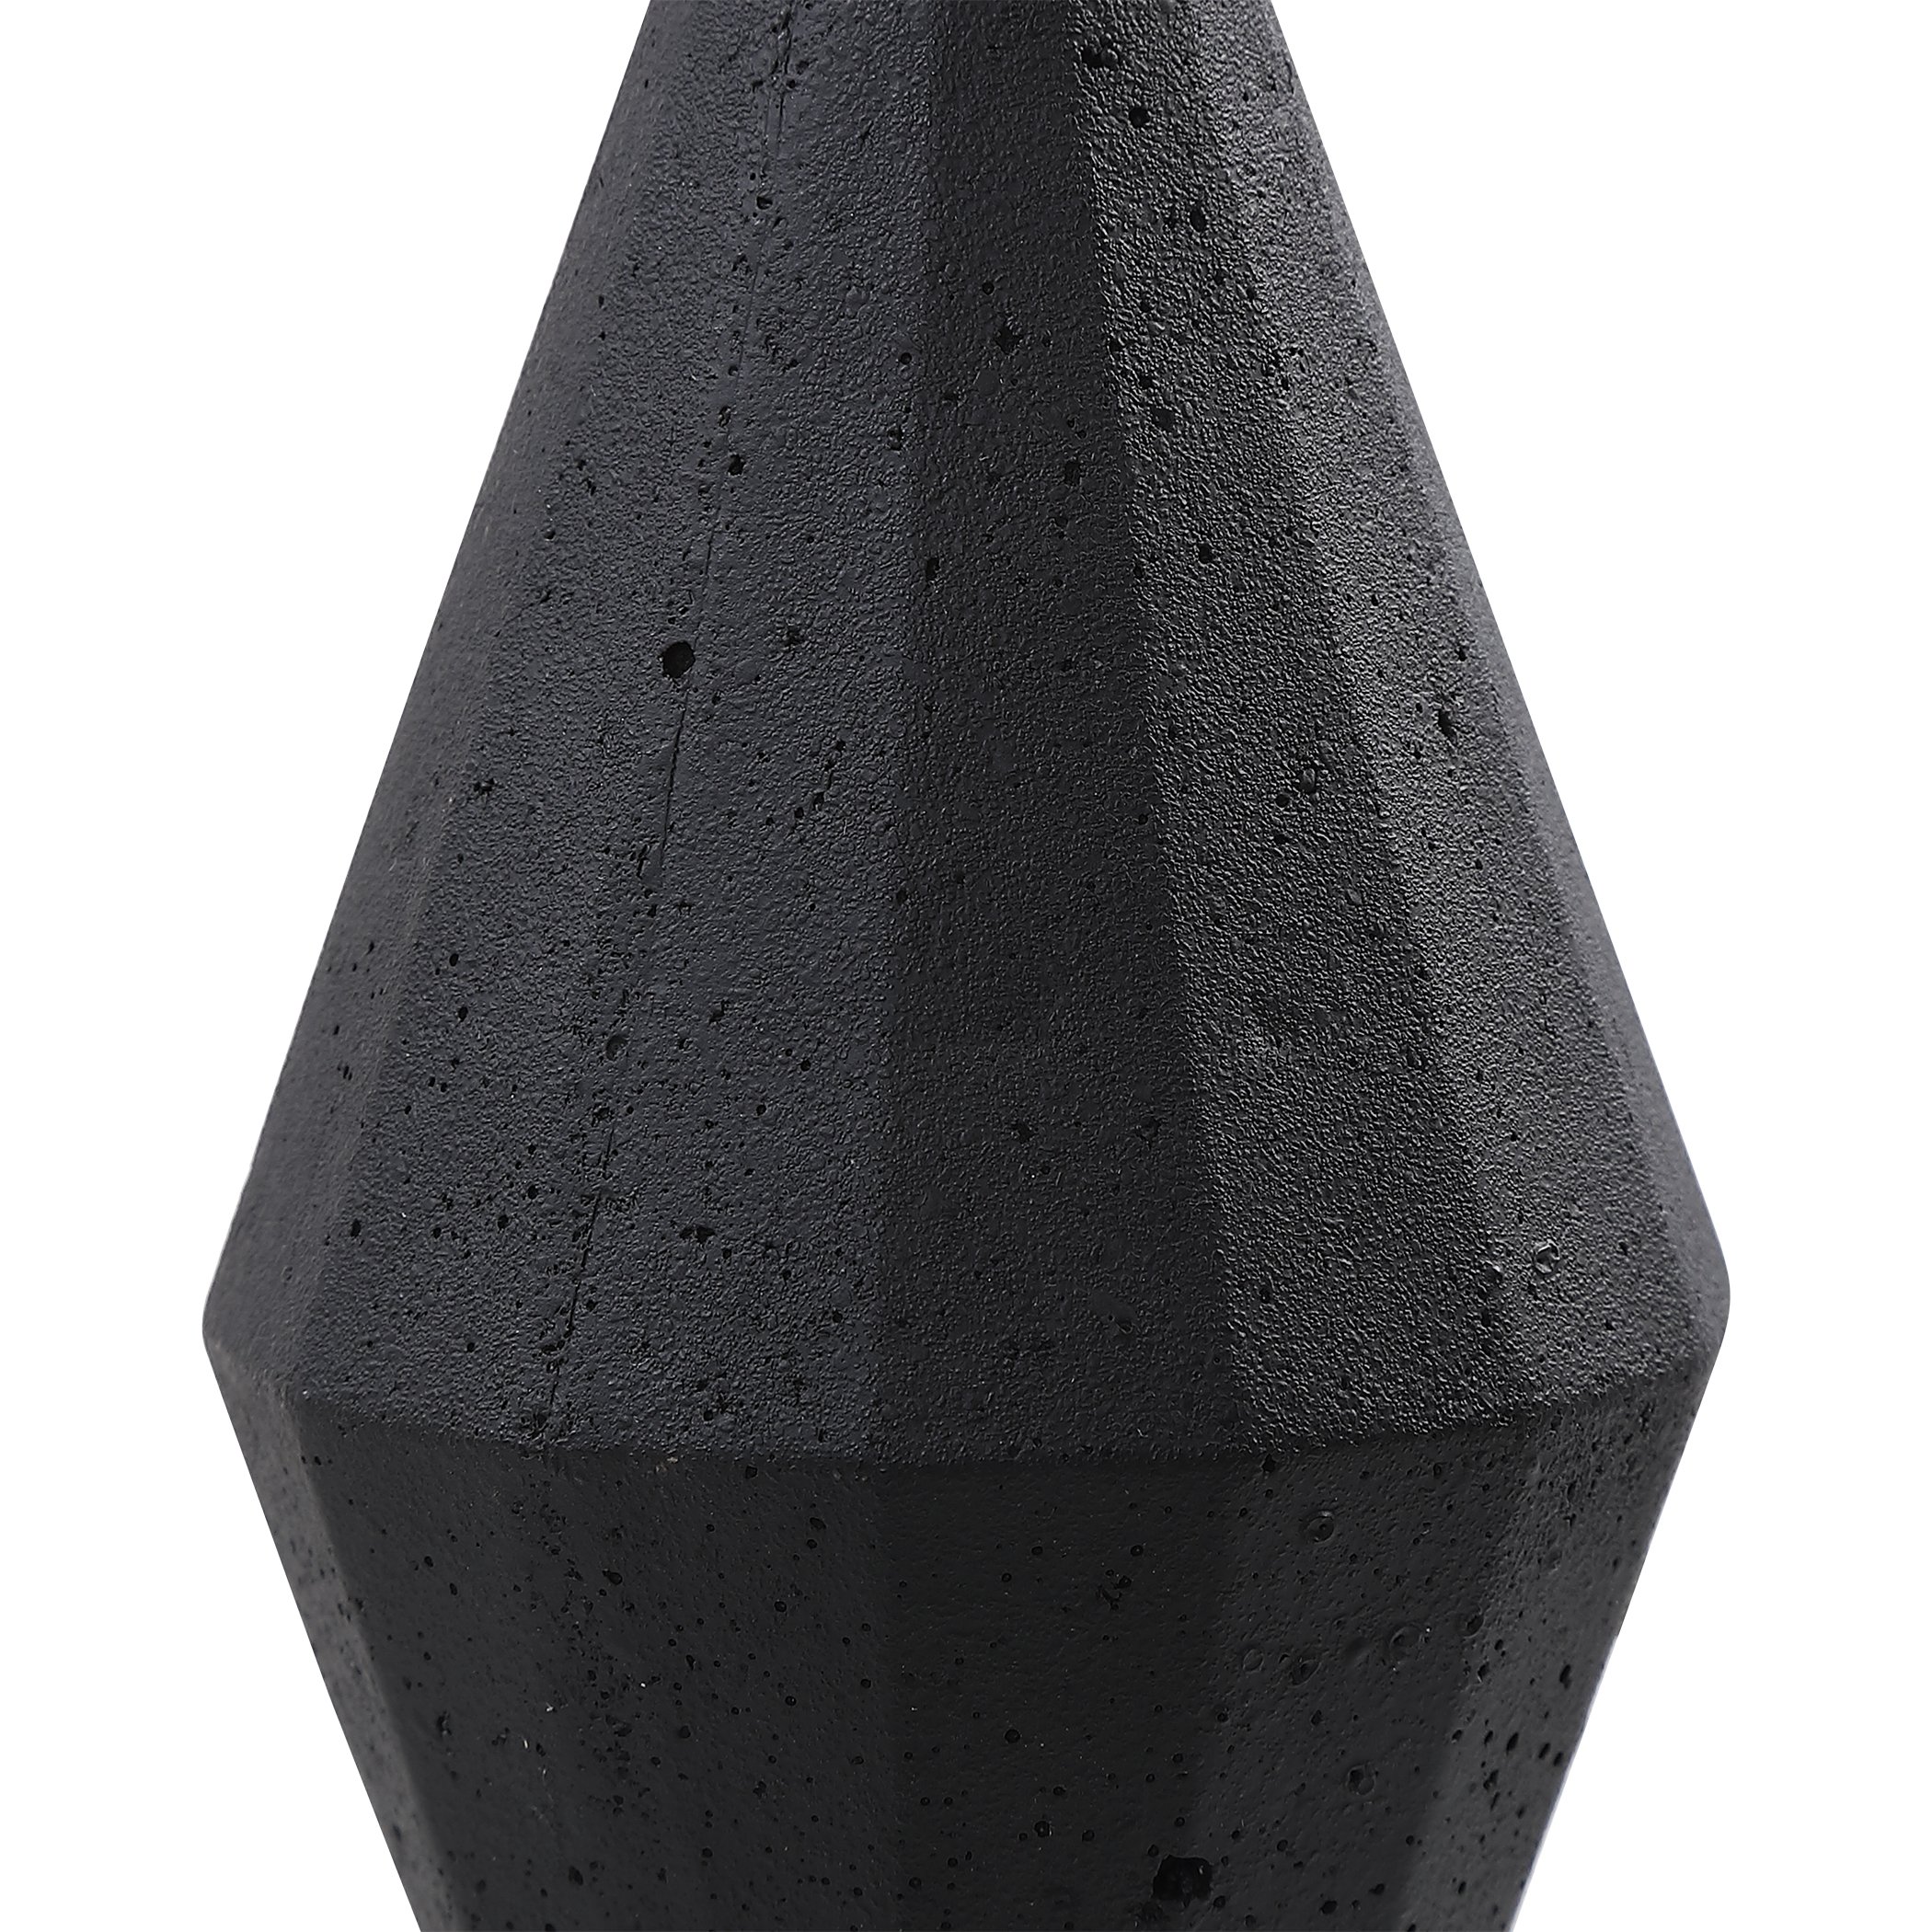 Alize Black Sculptures,, S/3 - Image 2